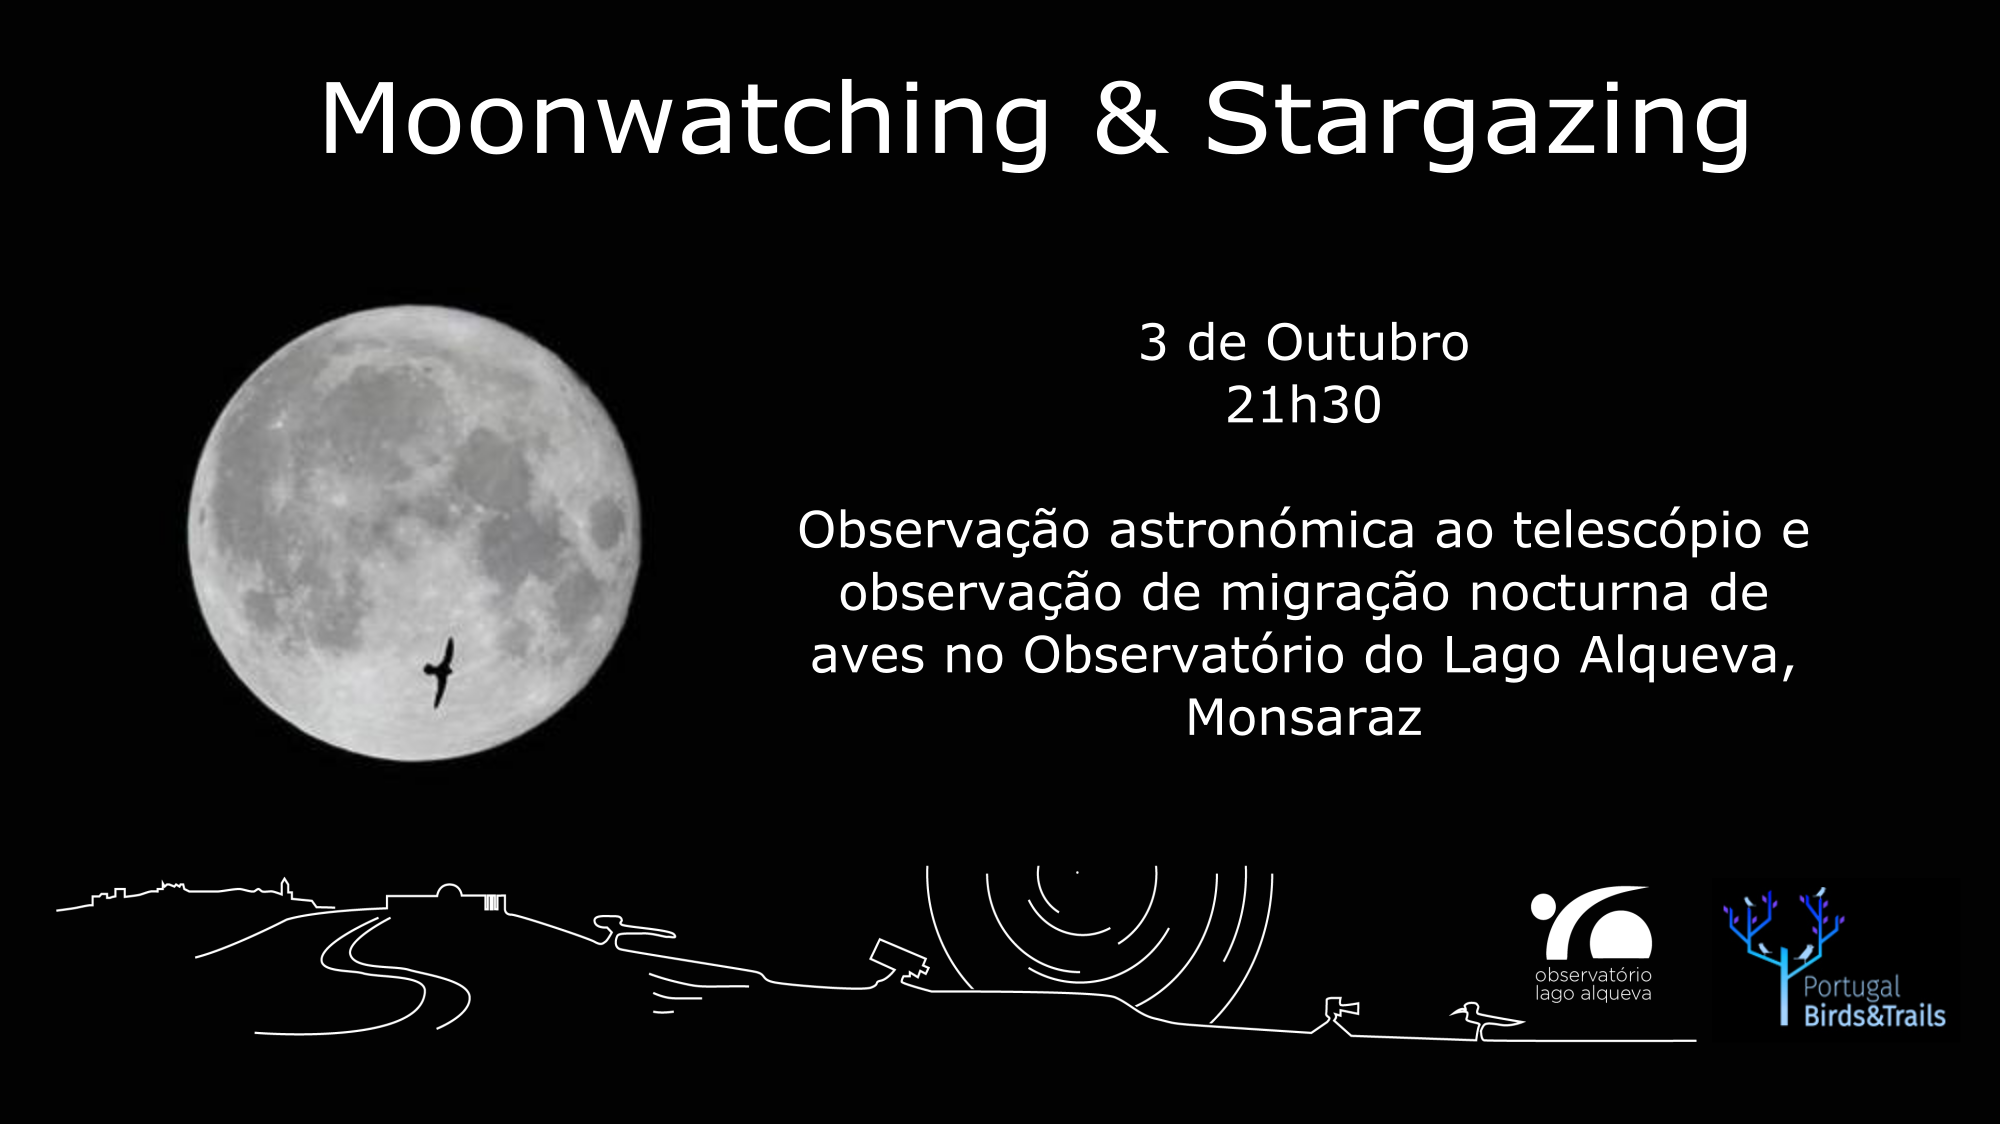 Moonwatching & Stargazing